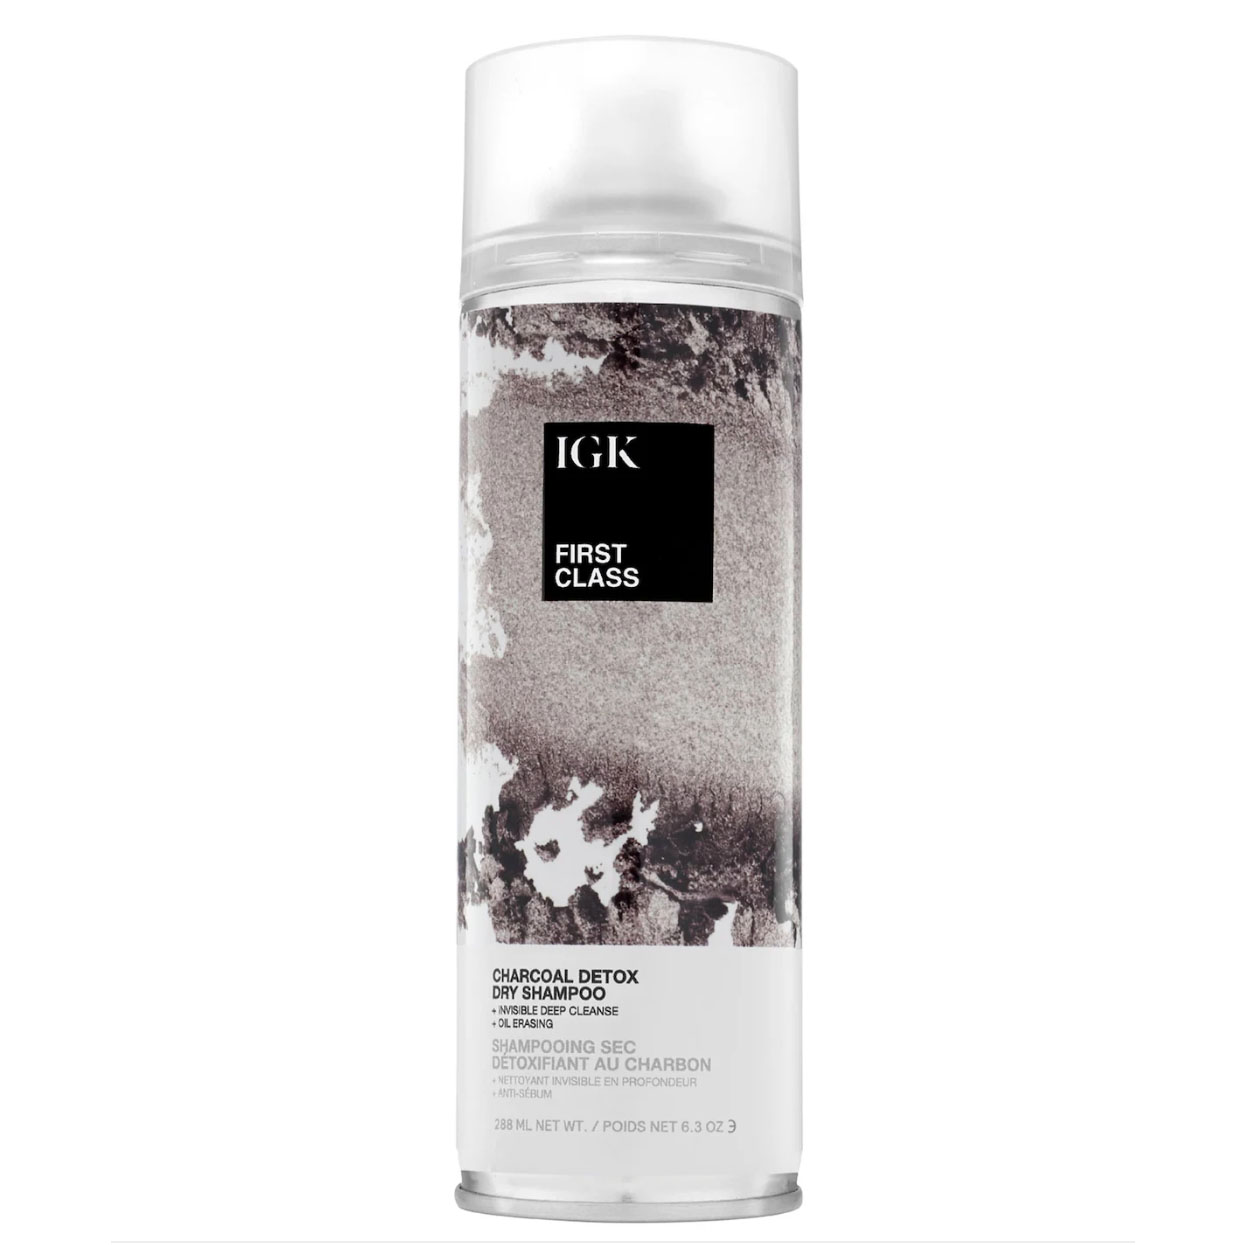 First Class Charcoal Detox Dry Shampoo in aerosol bottle